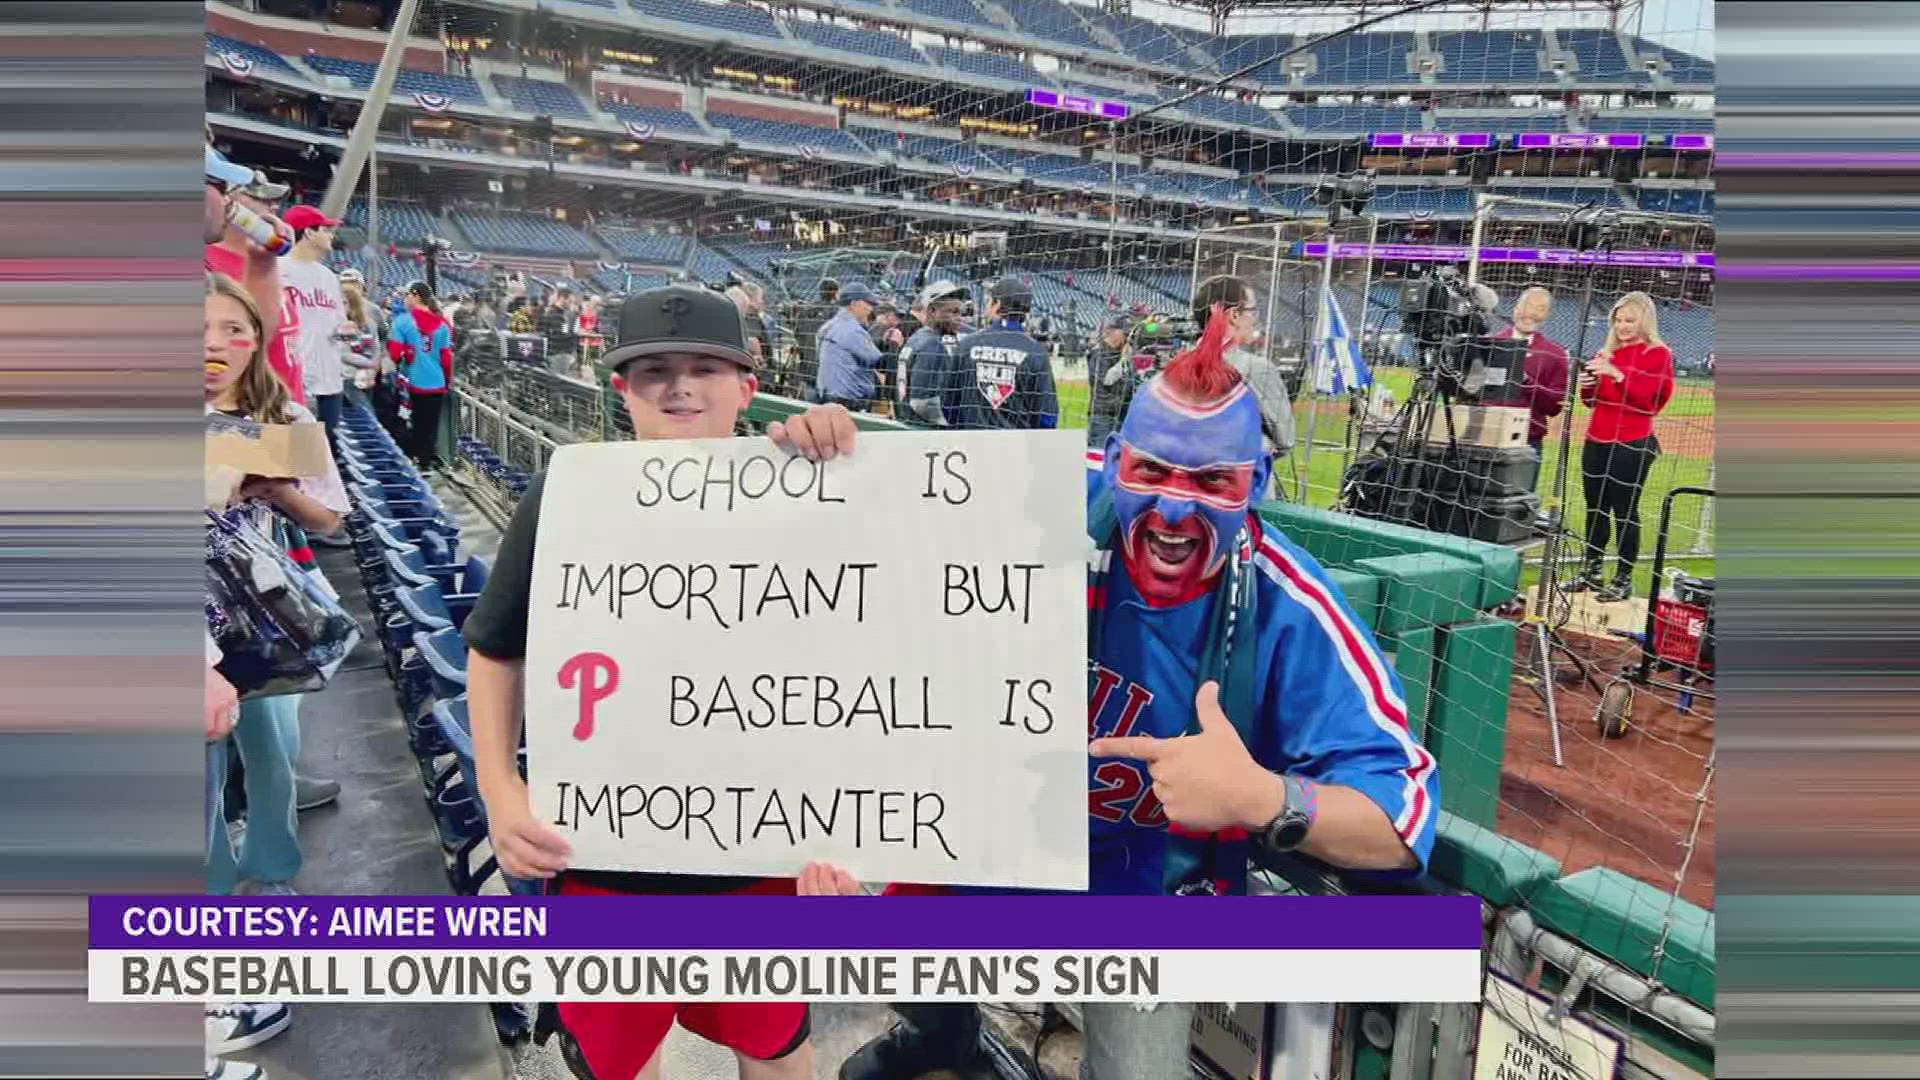 Warminster boy goes viral after World Series fan fun caught on camera